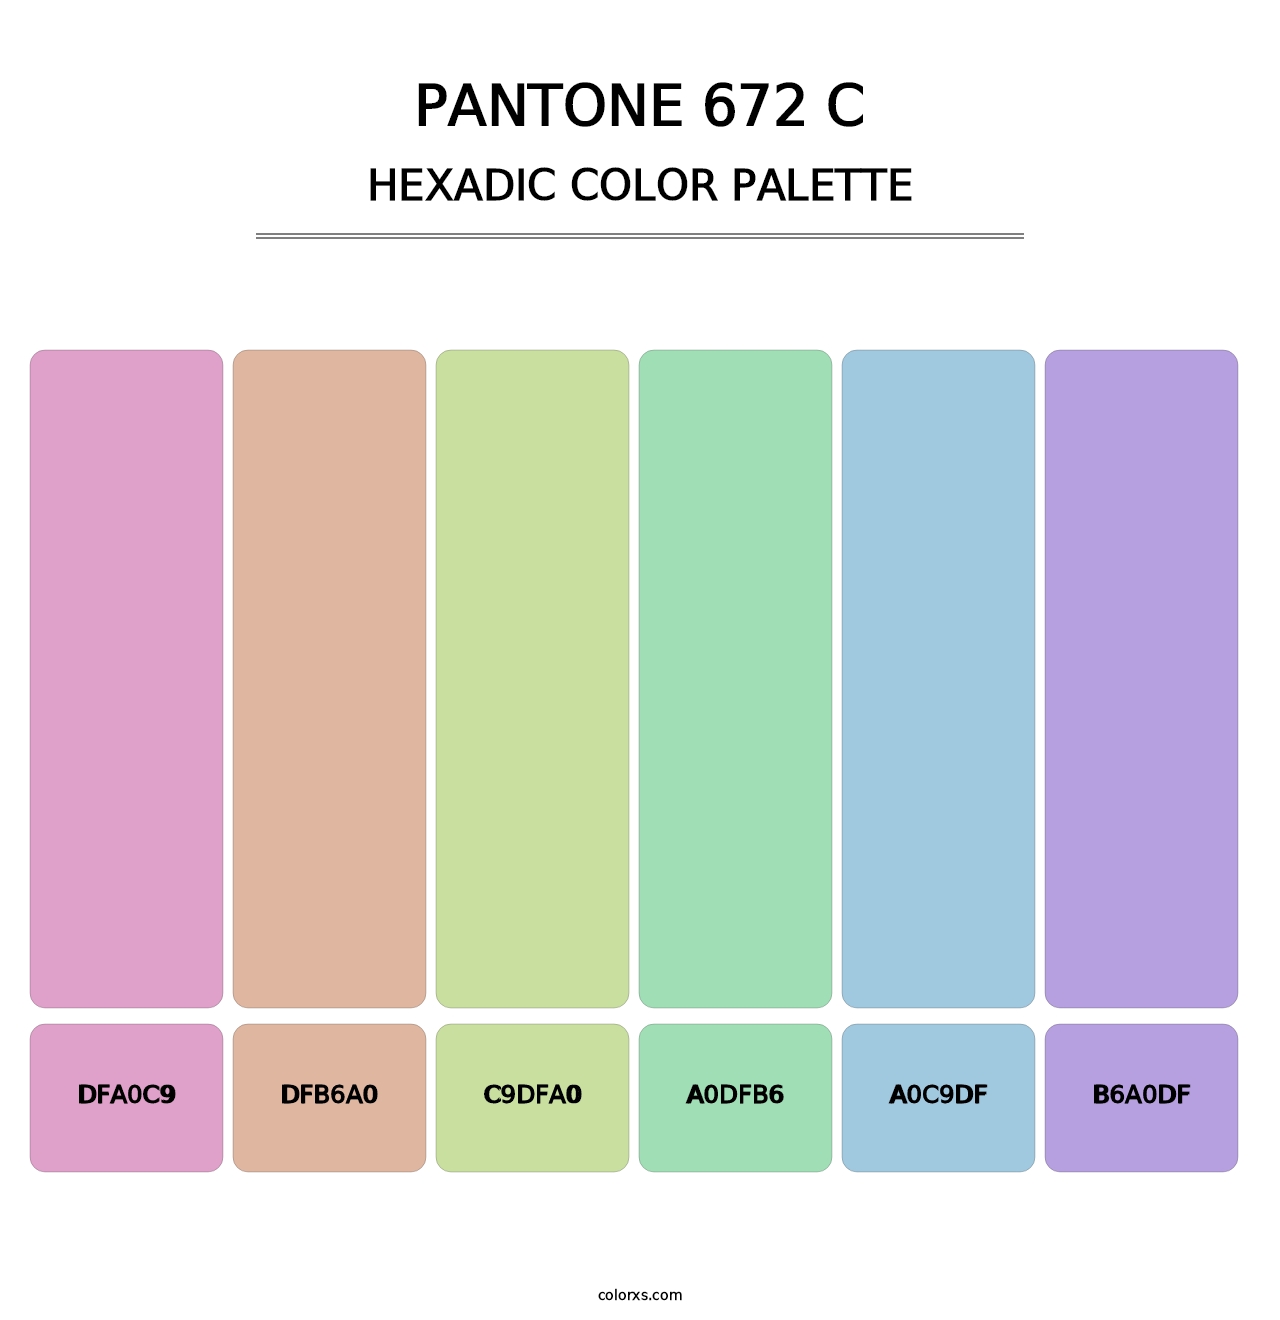 PANTONE 672 C - Hexadic Color Palette